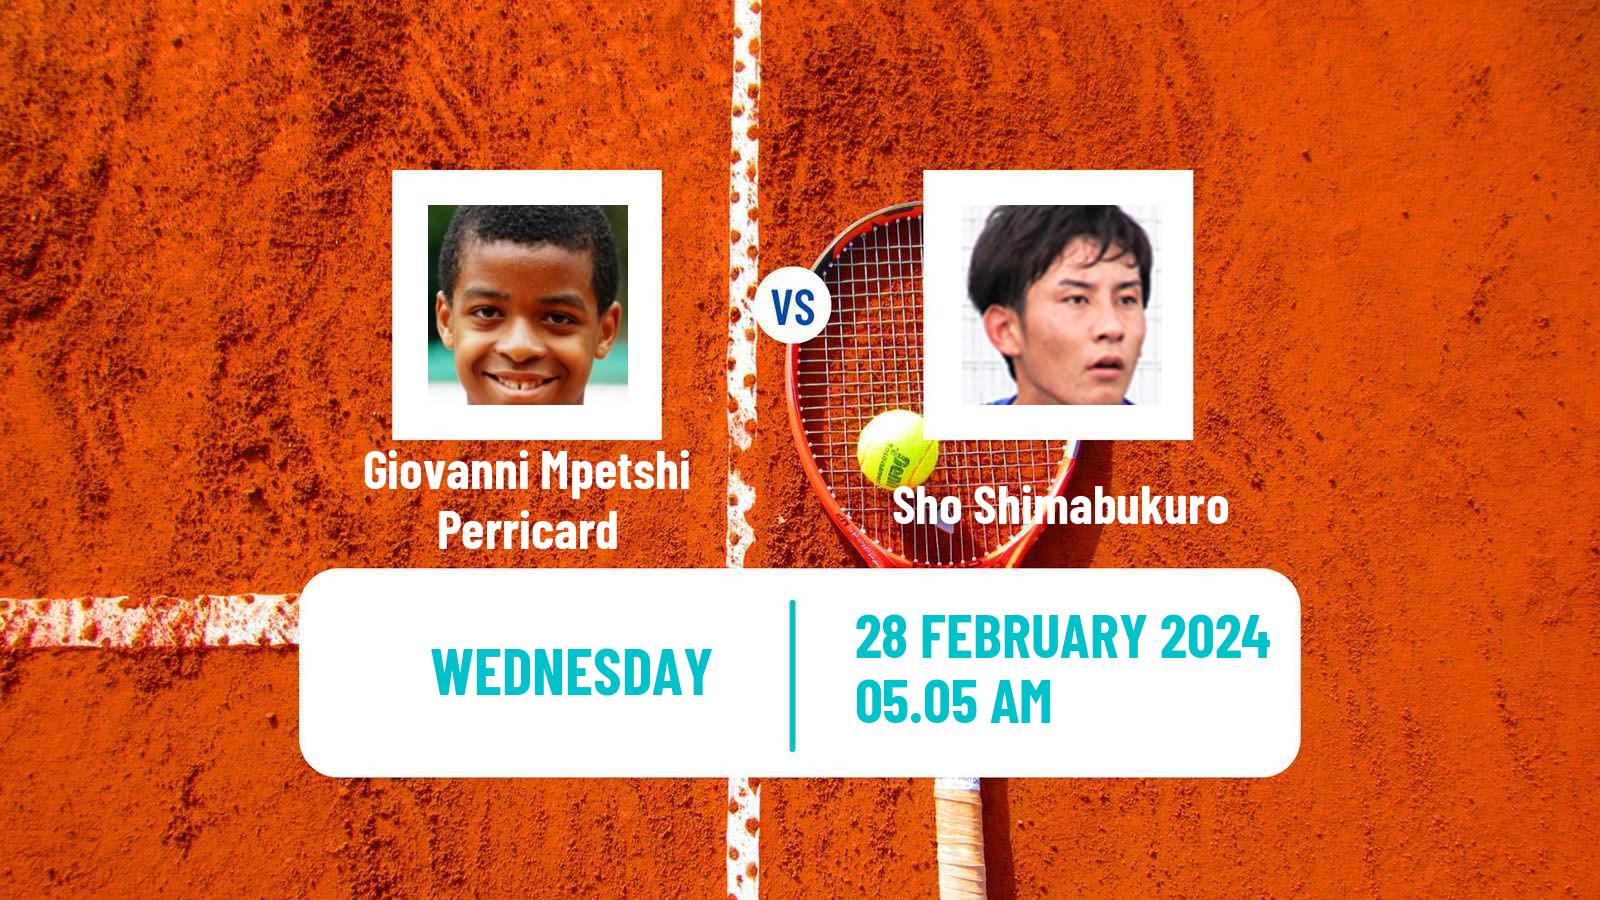 Tennis Lille Challenger Men Giovanni Mpetshi Perricard - Sho Shimabukuro